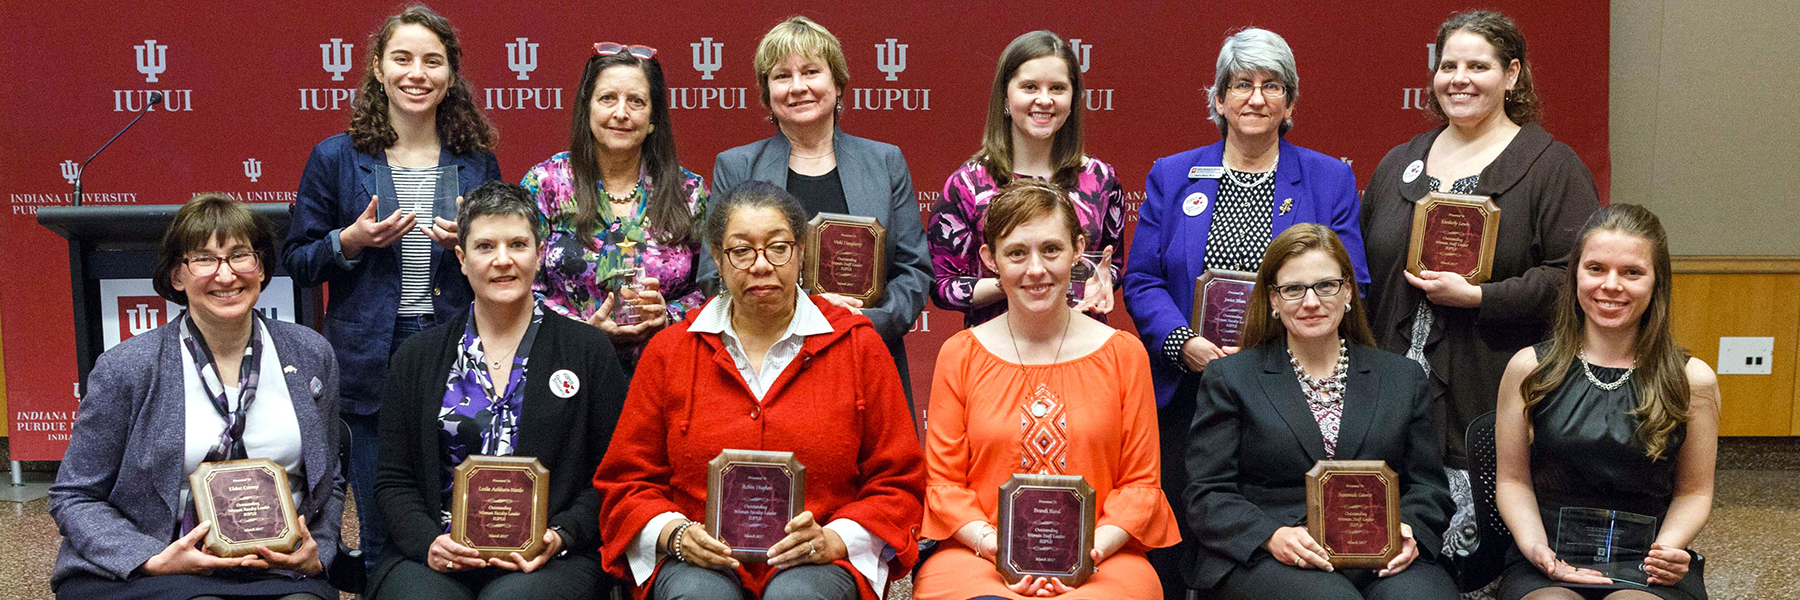 Winners from the Women's Leadership Awards 2019.